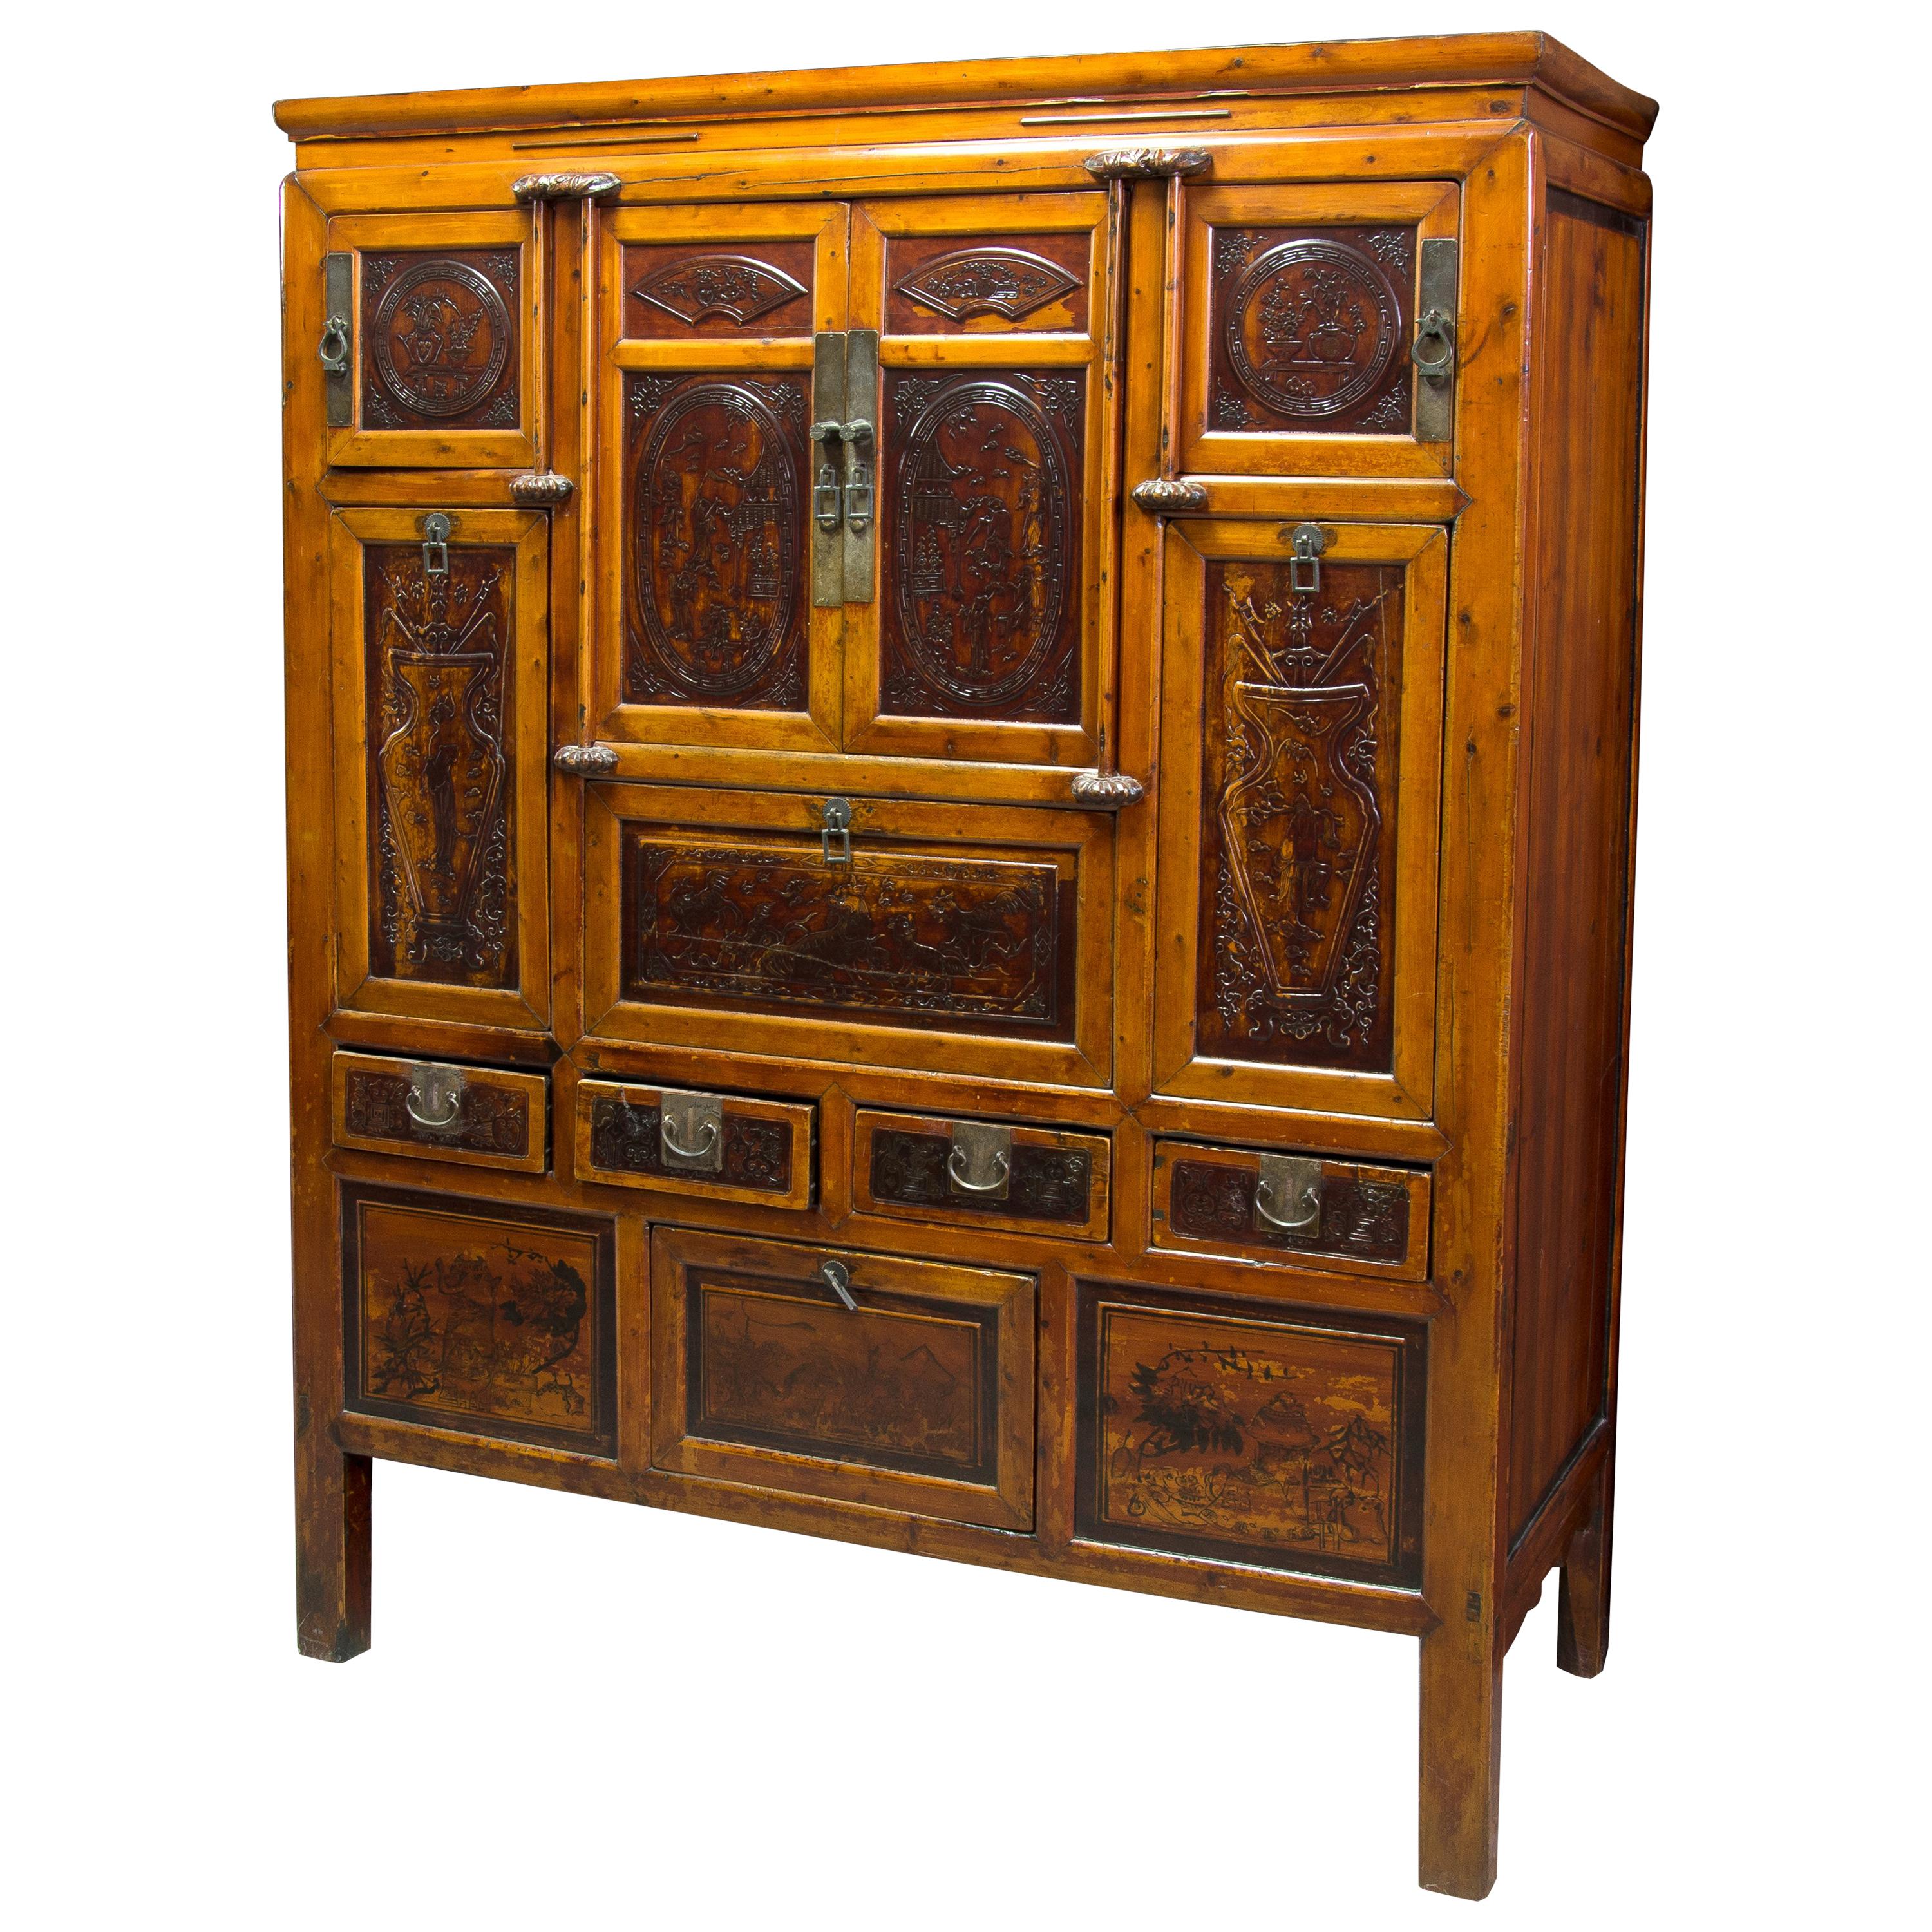 Oriental Cabinet. Wood, Metal, circa Early 20th Century